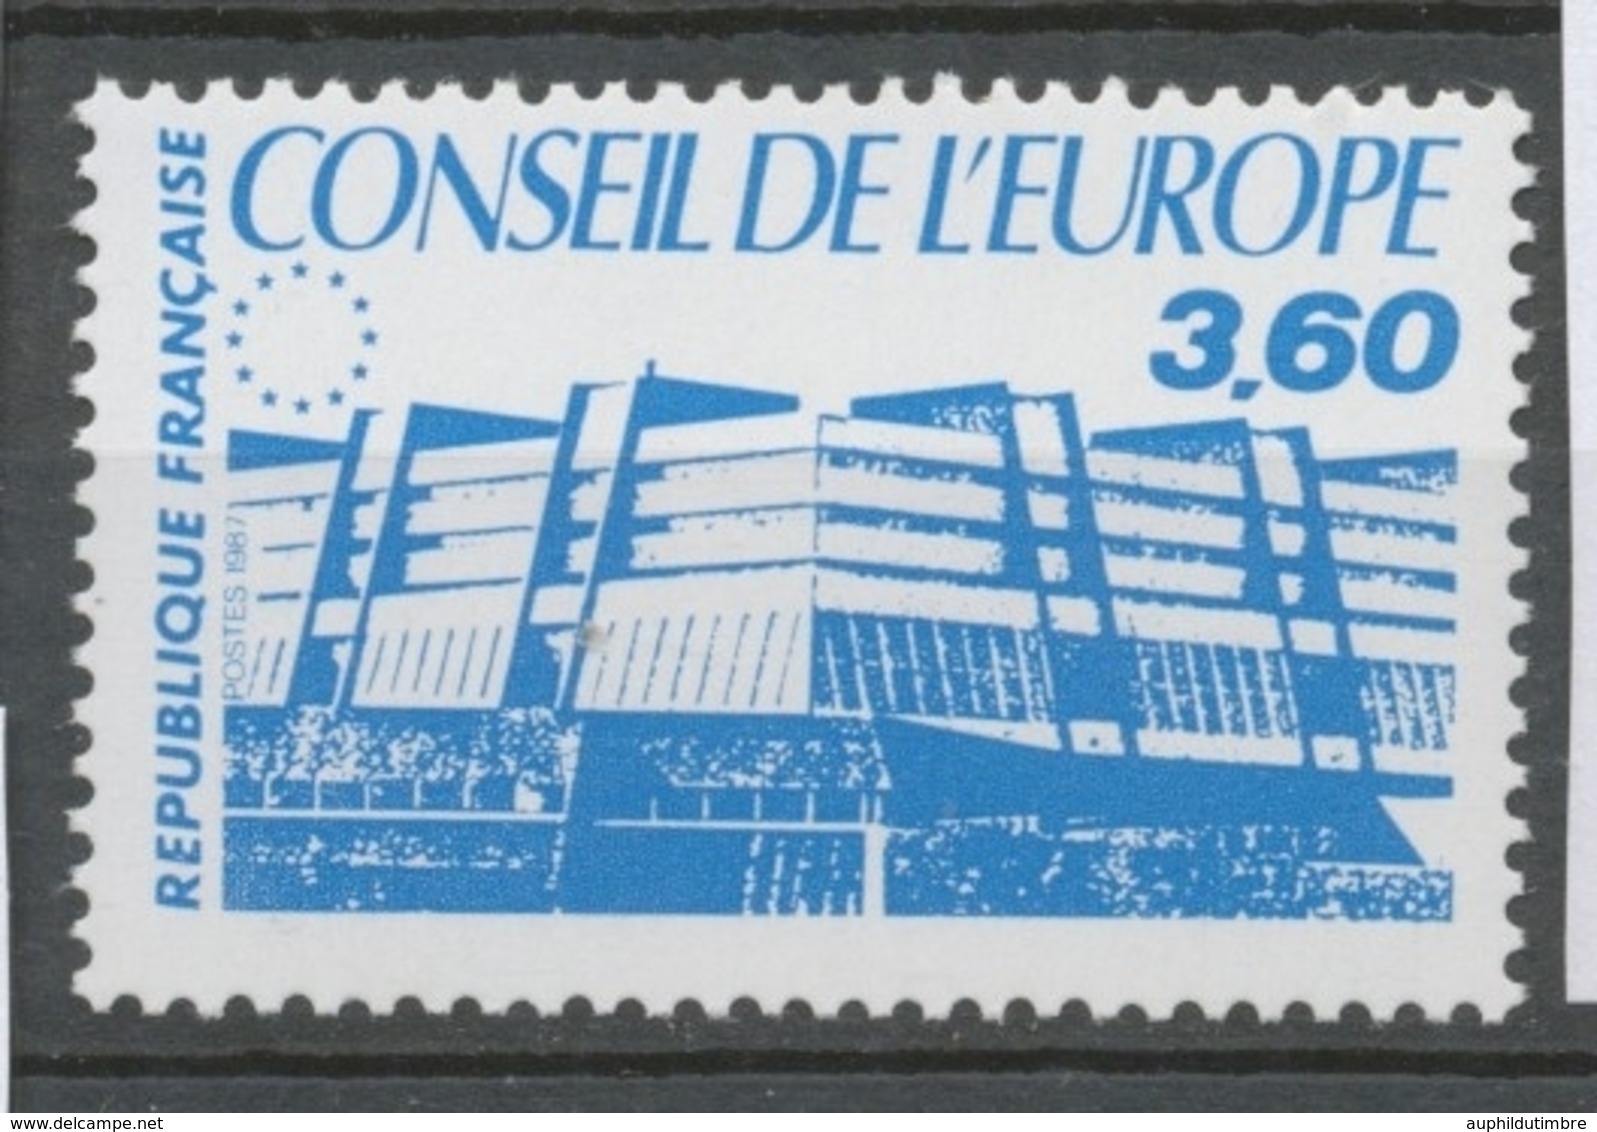 Service N°97 Conseil De L' Europe. 3f.60 Bleu ZS97 - Mint/Hinged